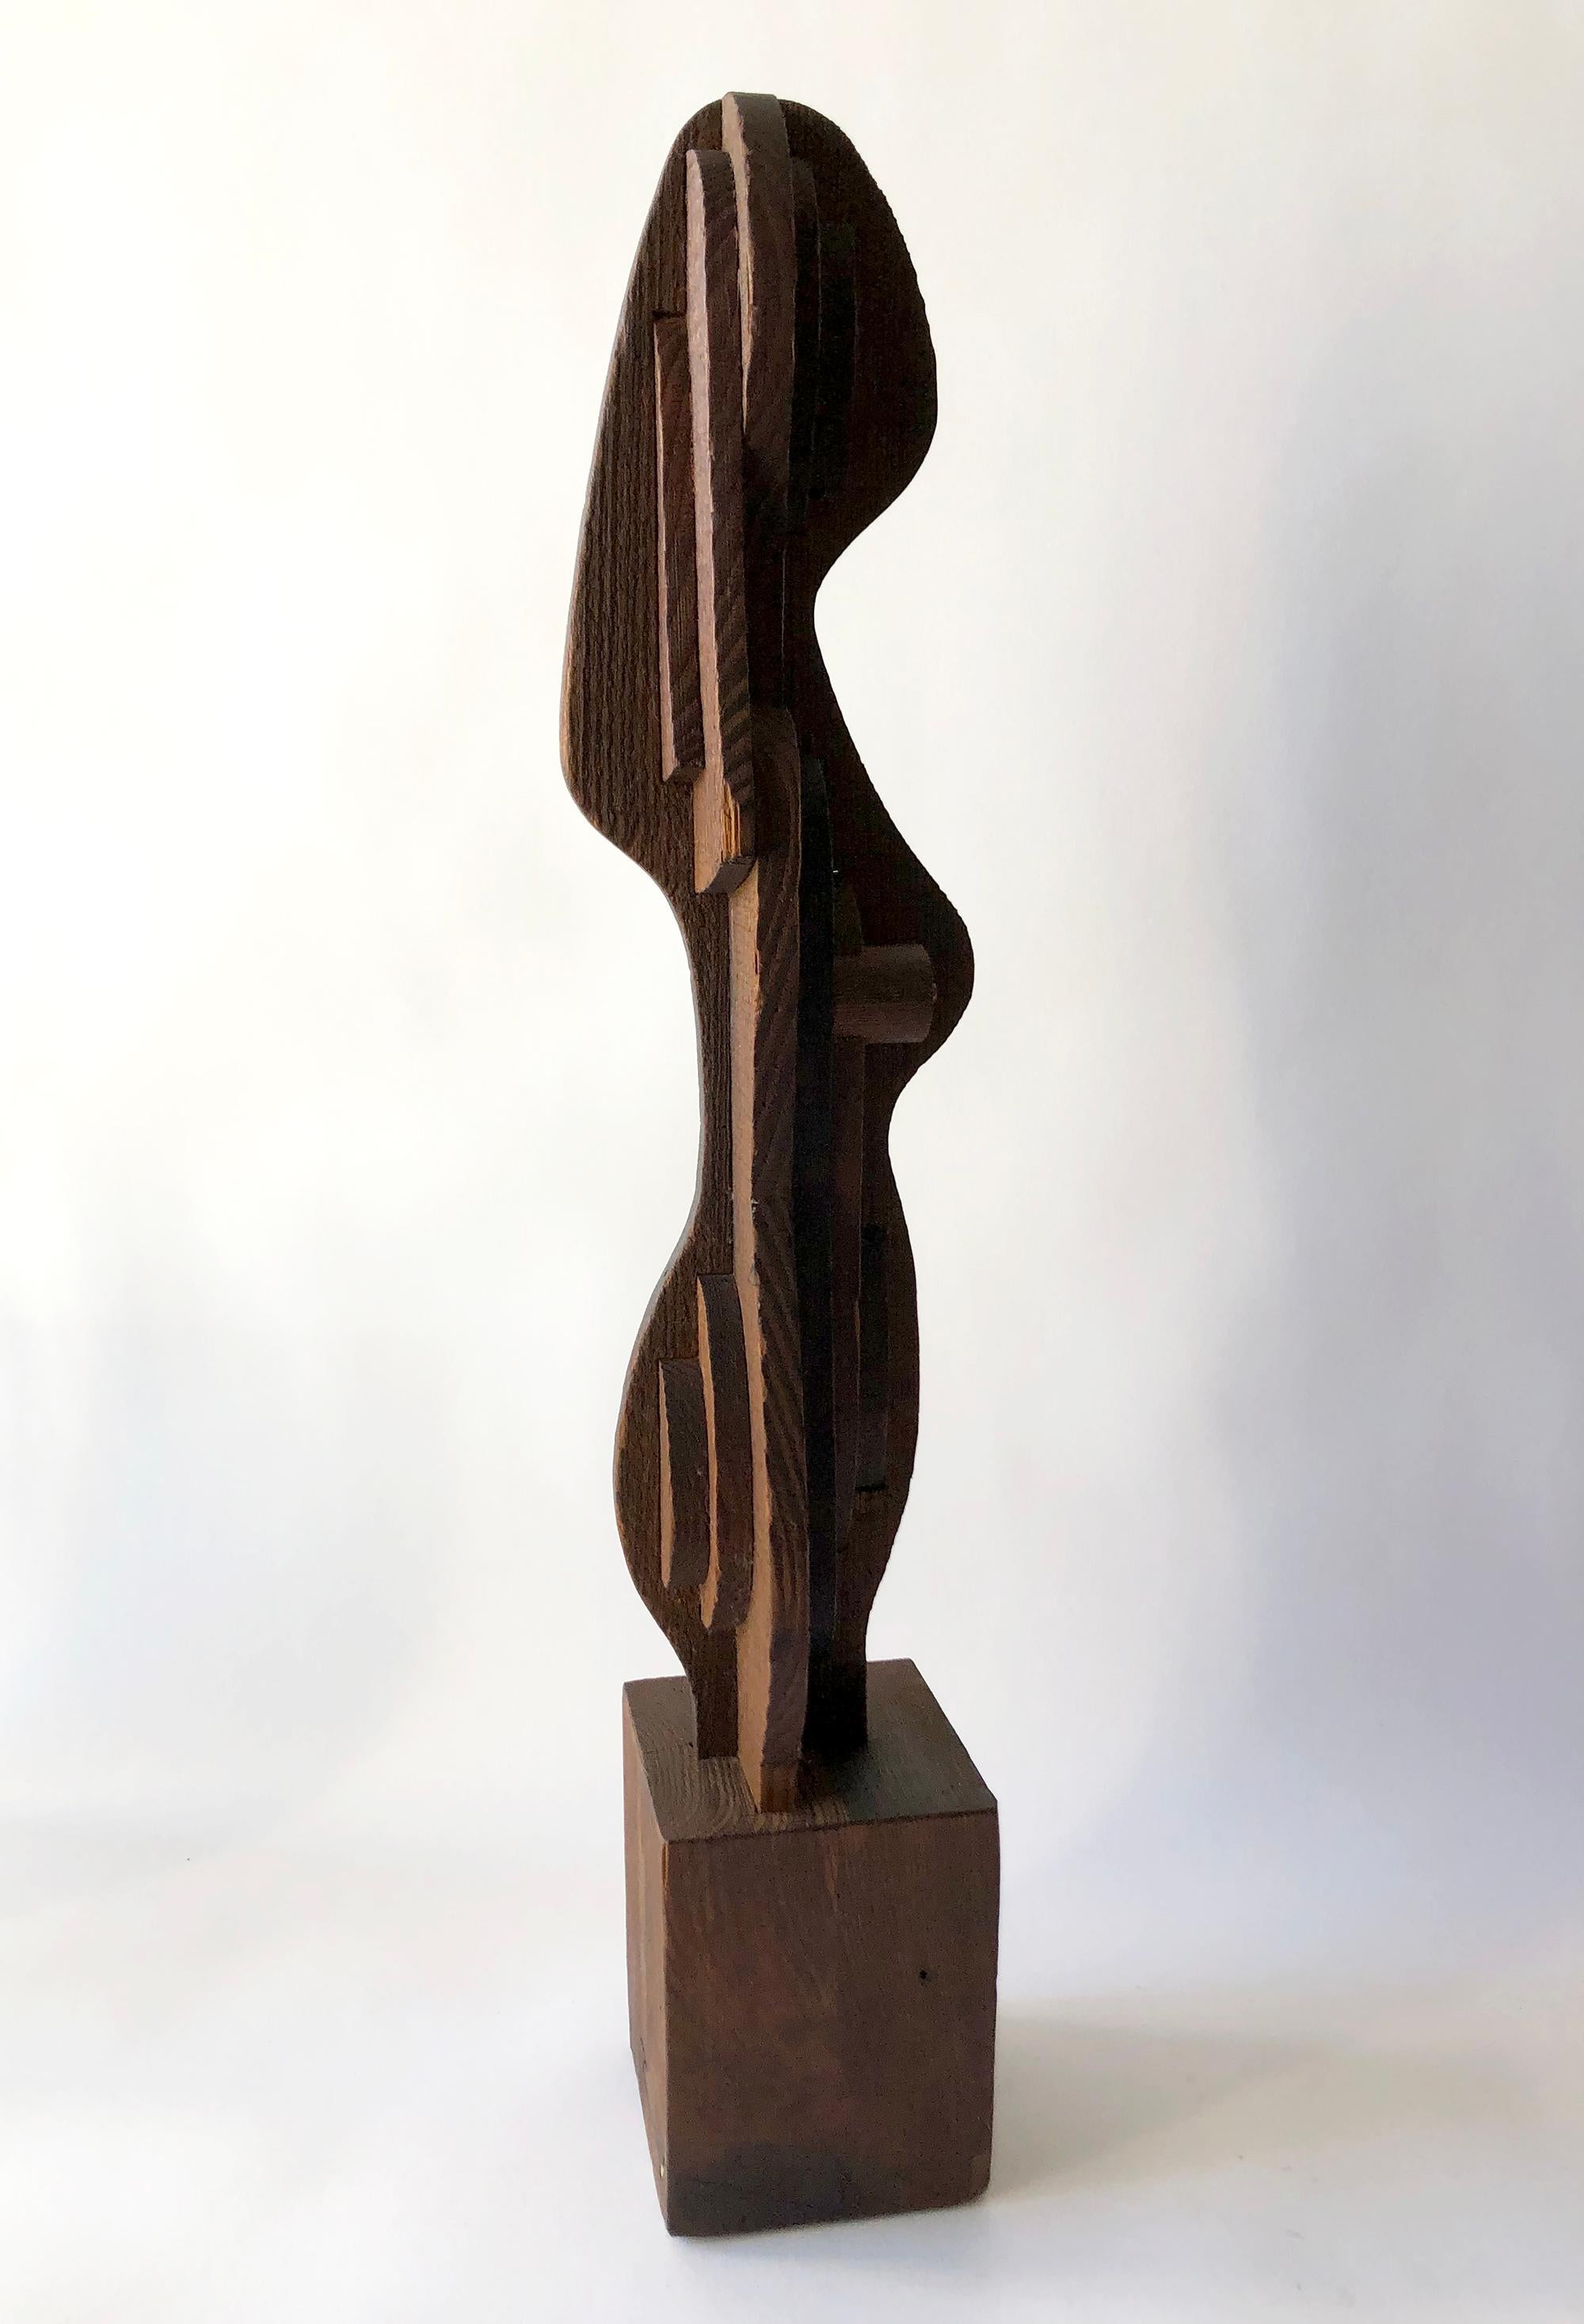 layered wood sculpture